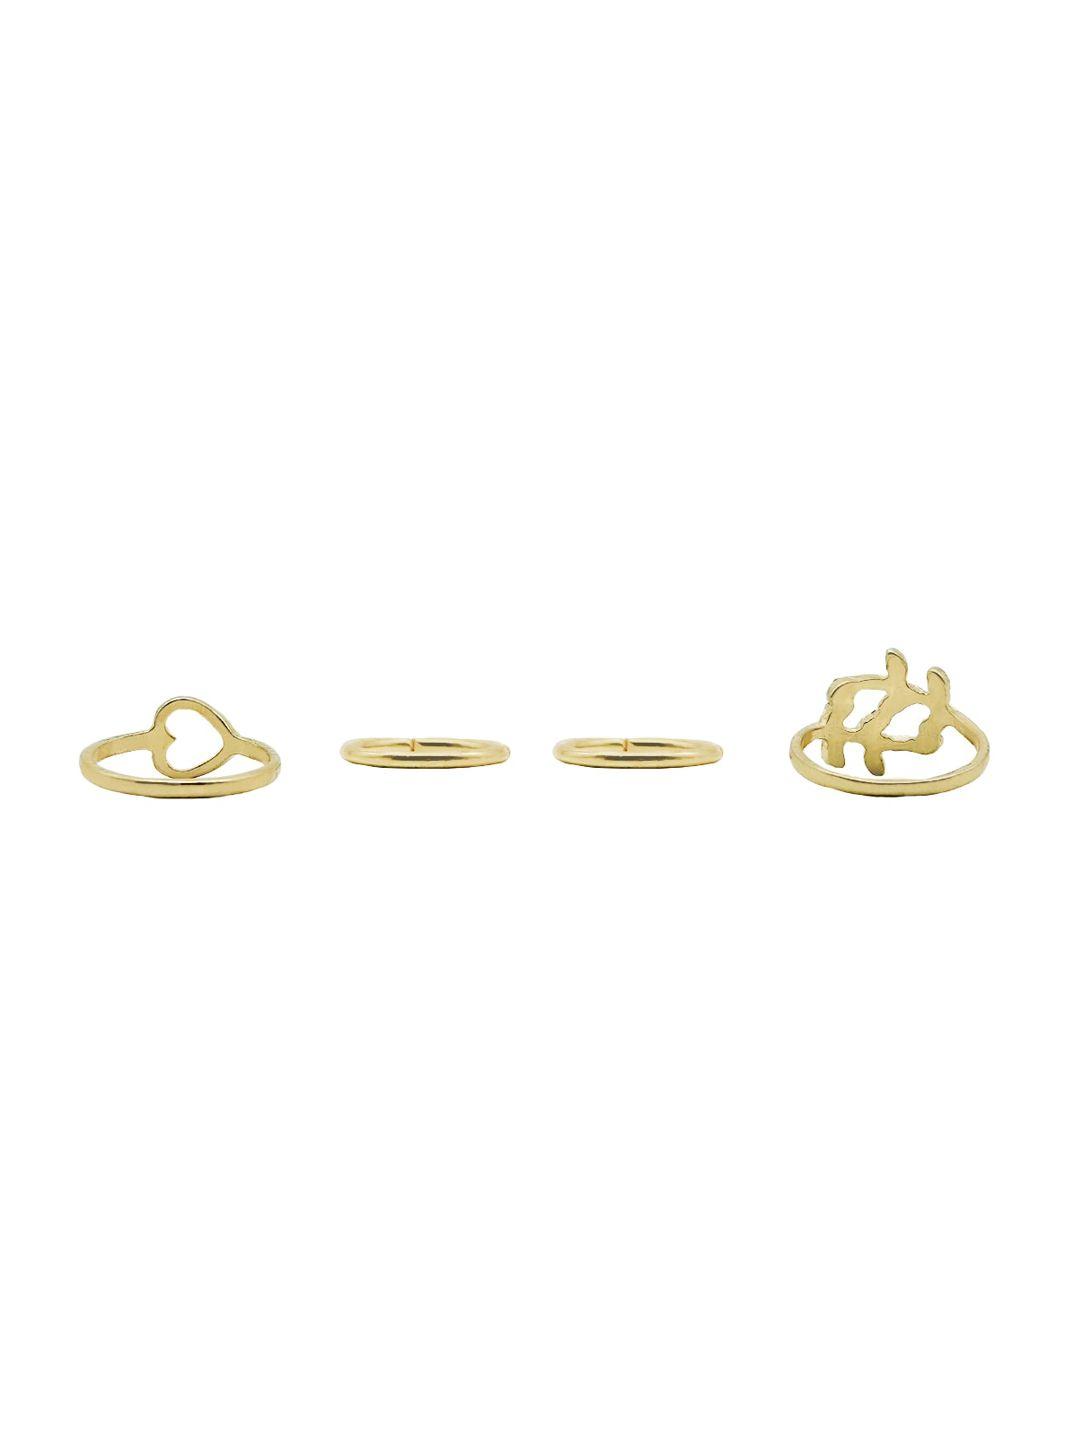 joker & witch set of 4 gold-plated white stone studded finger ring